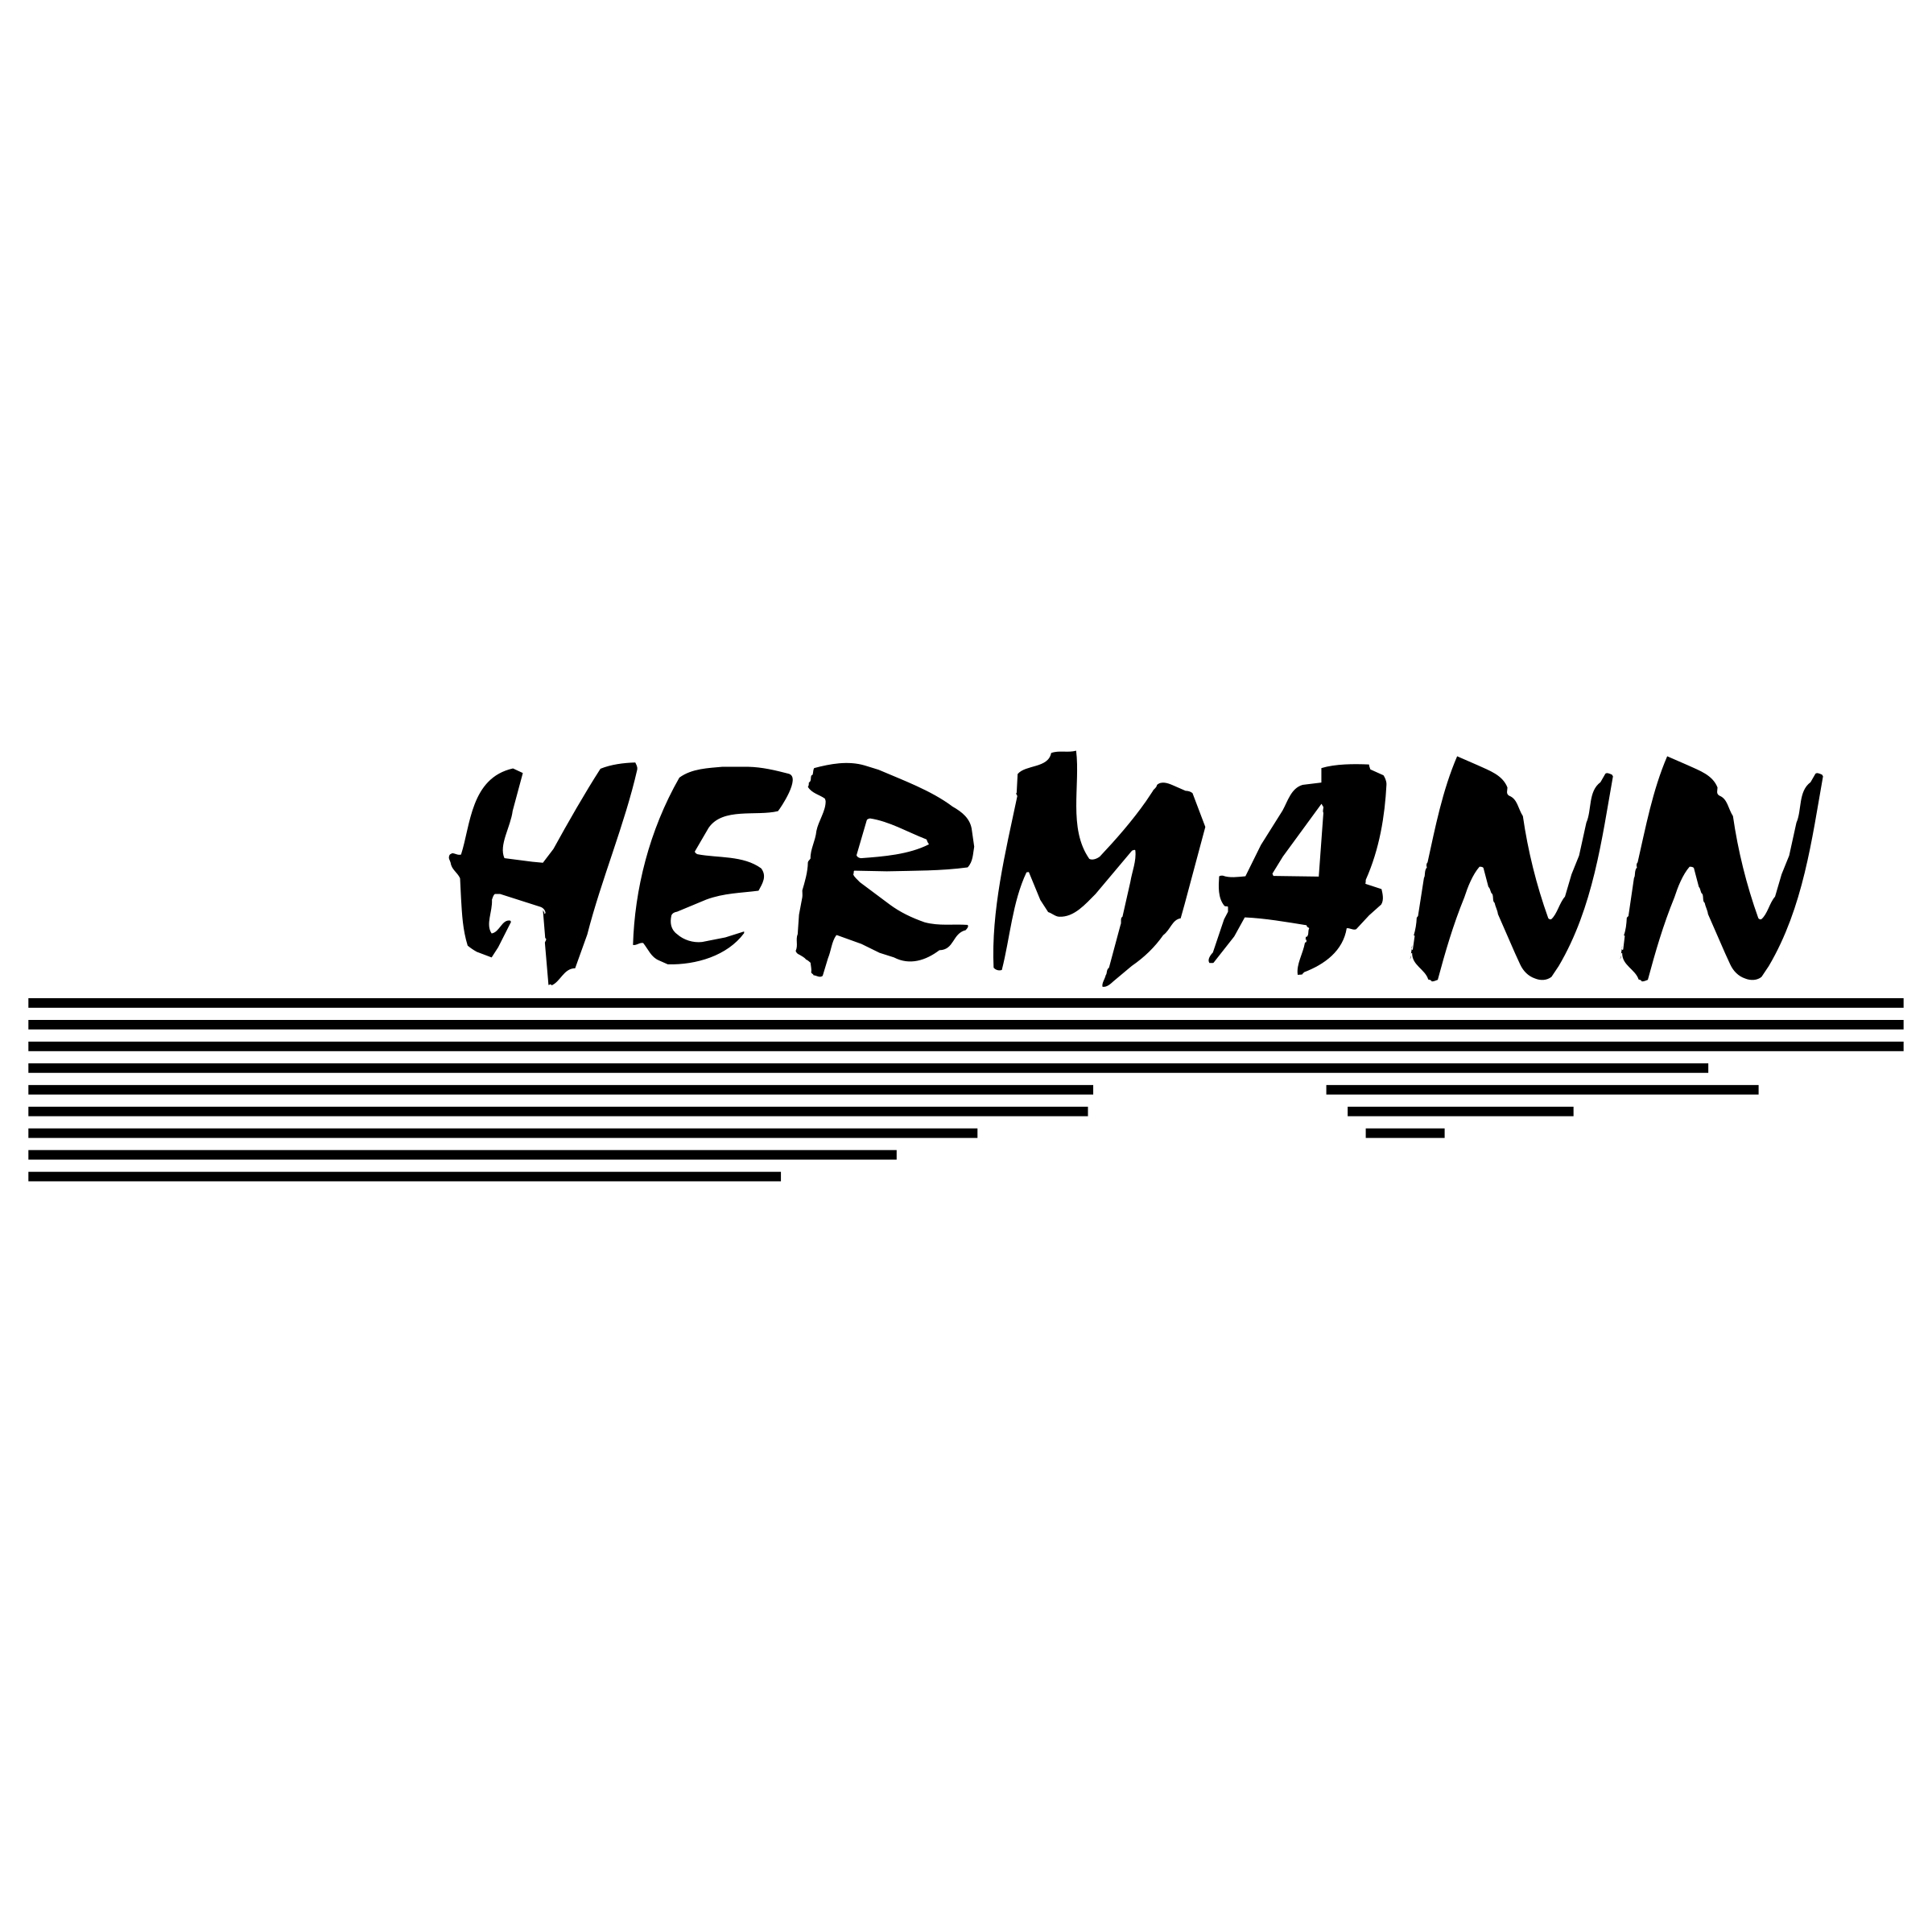 Herman Logo - Herman Logo PNG Transparent & SVG Vector - Freebie Supply